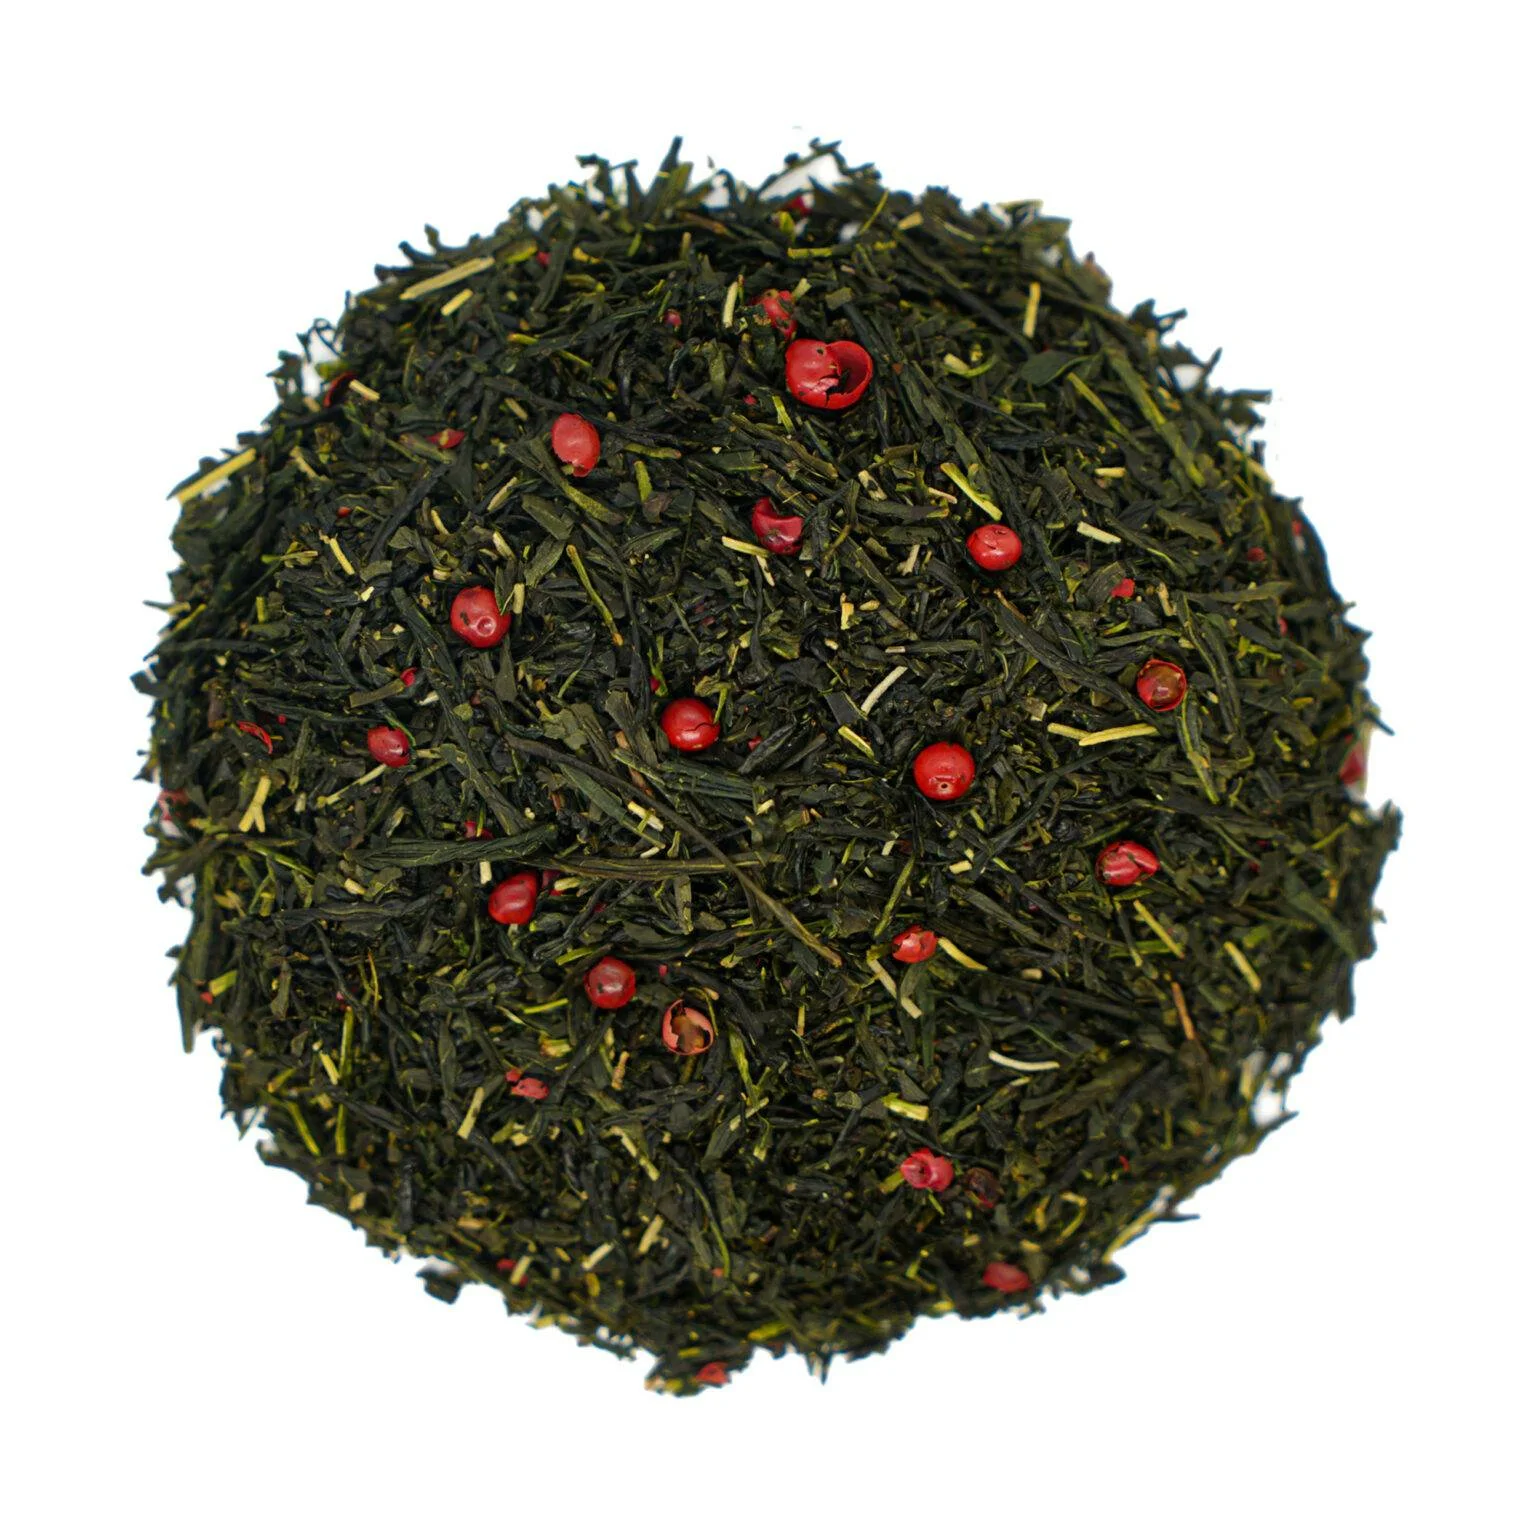 Herbata Rosemary - Odkryj czar zielonej herbaty sencha!